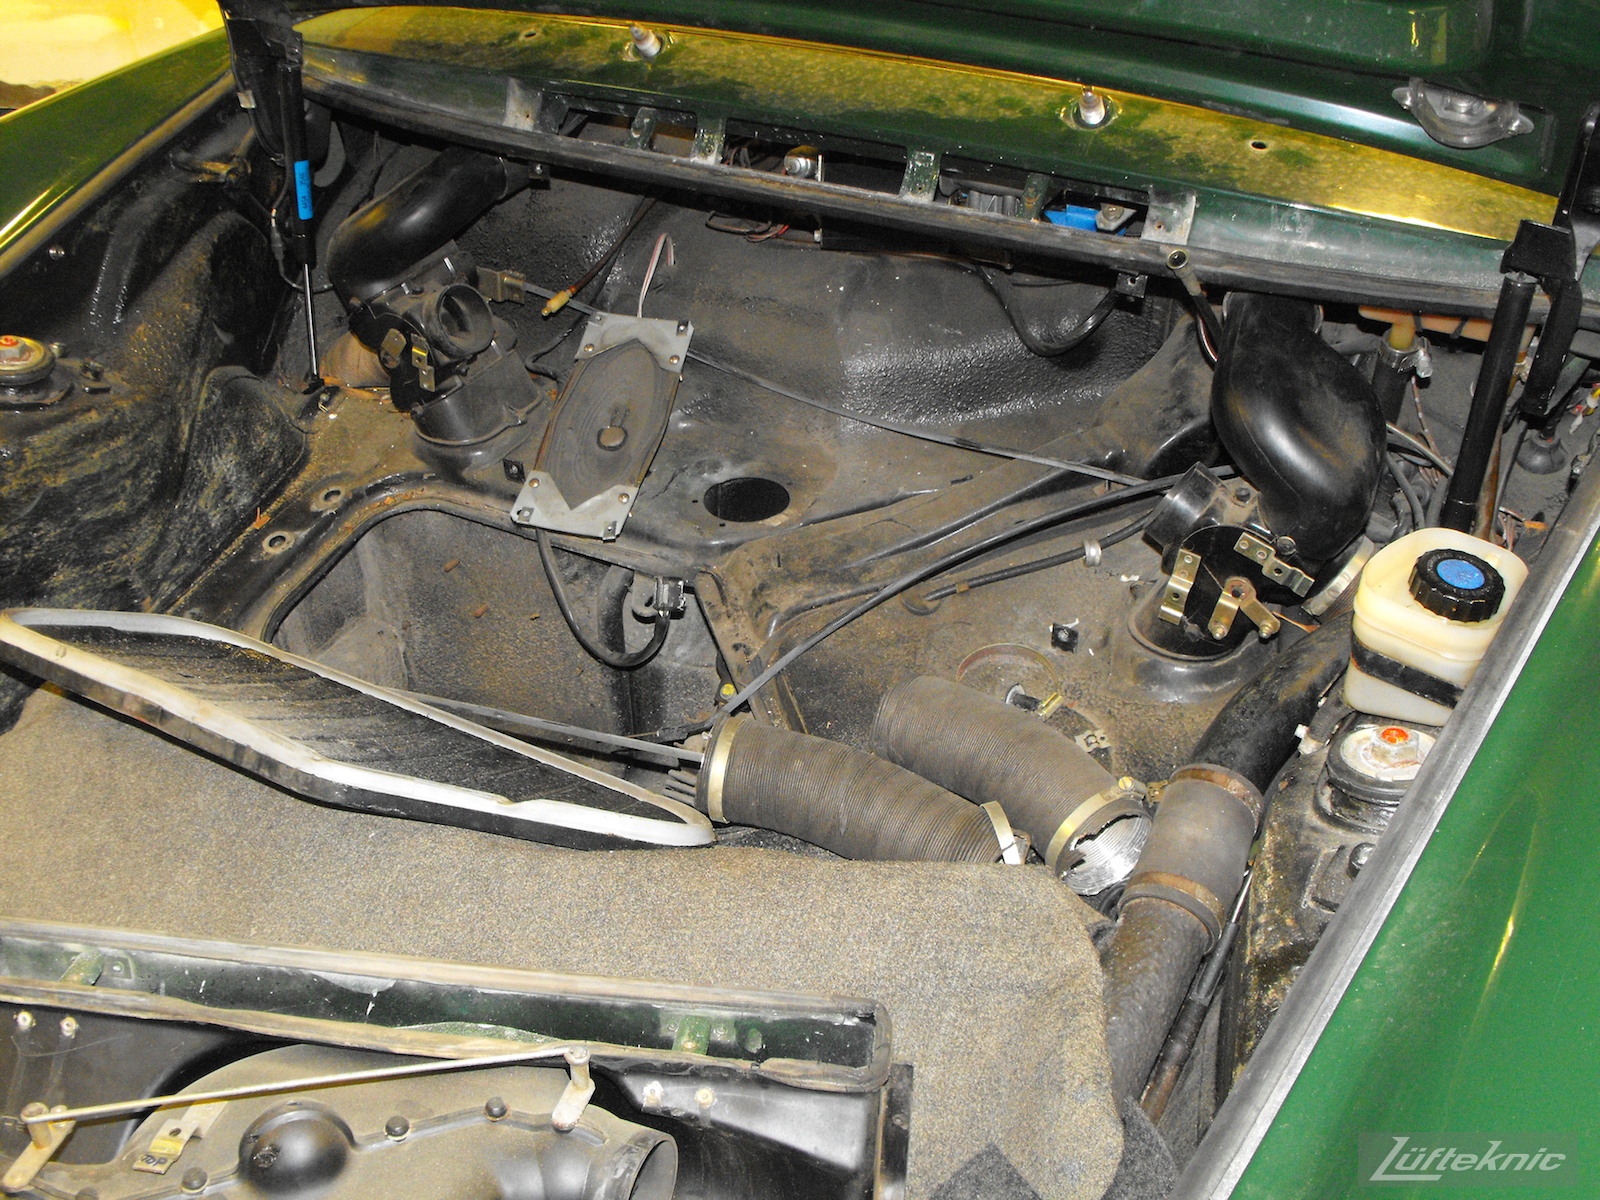 Under the hood of an Irish Green Porsche 912 undergoing restoration at Lufteknic.